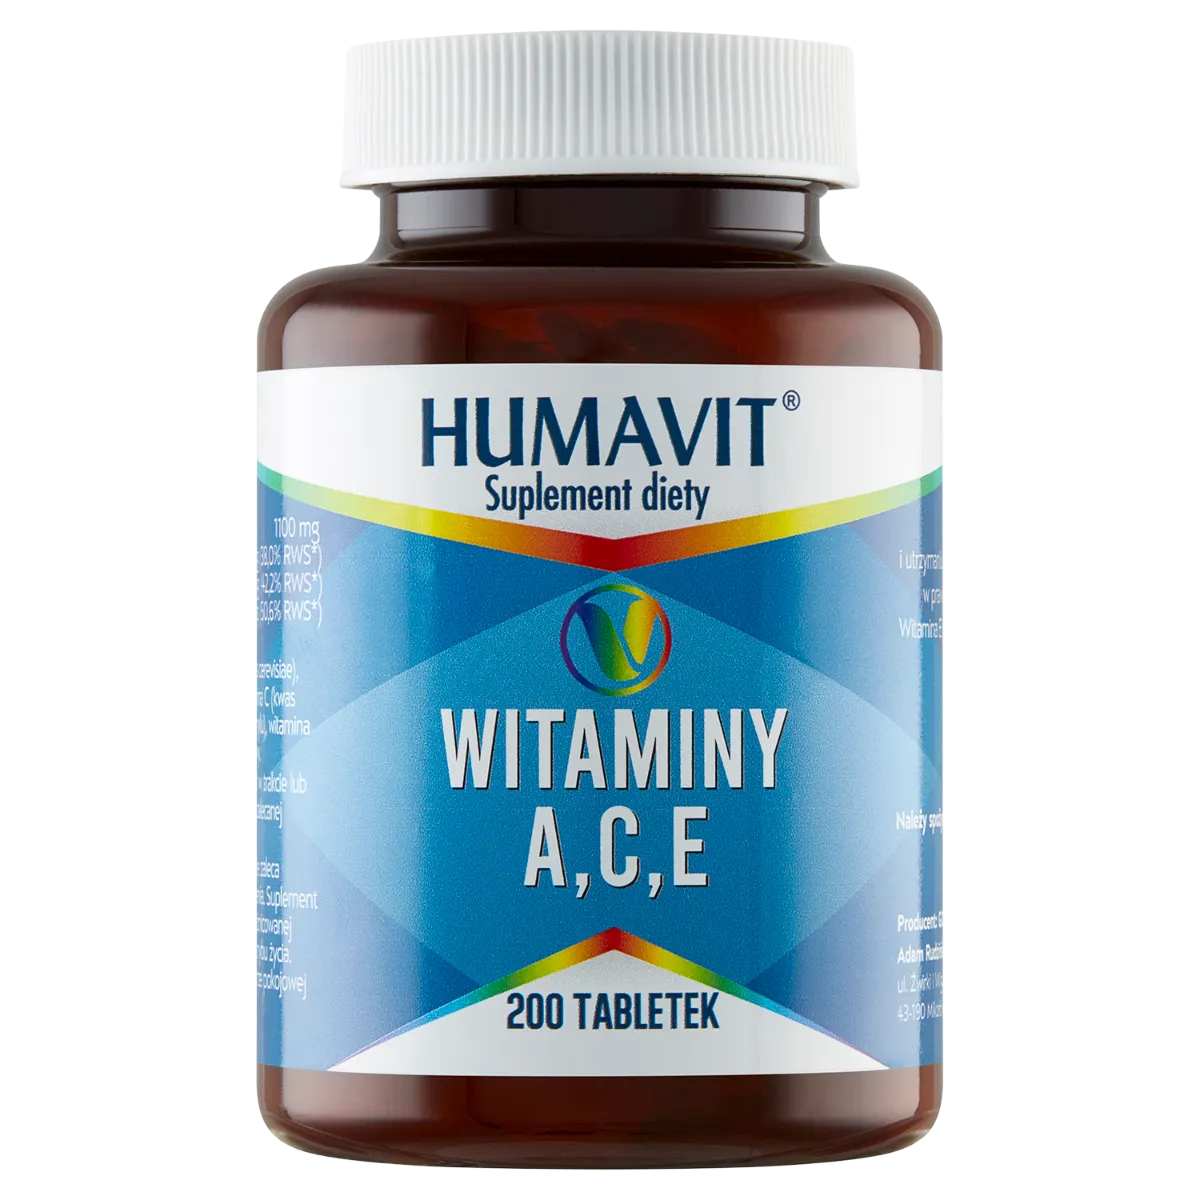 Humavit V Witaminy A,C,E, suplement diety, 200 tabletek